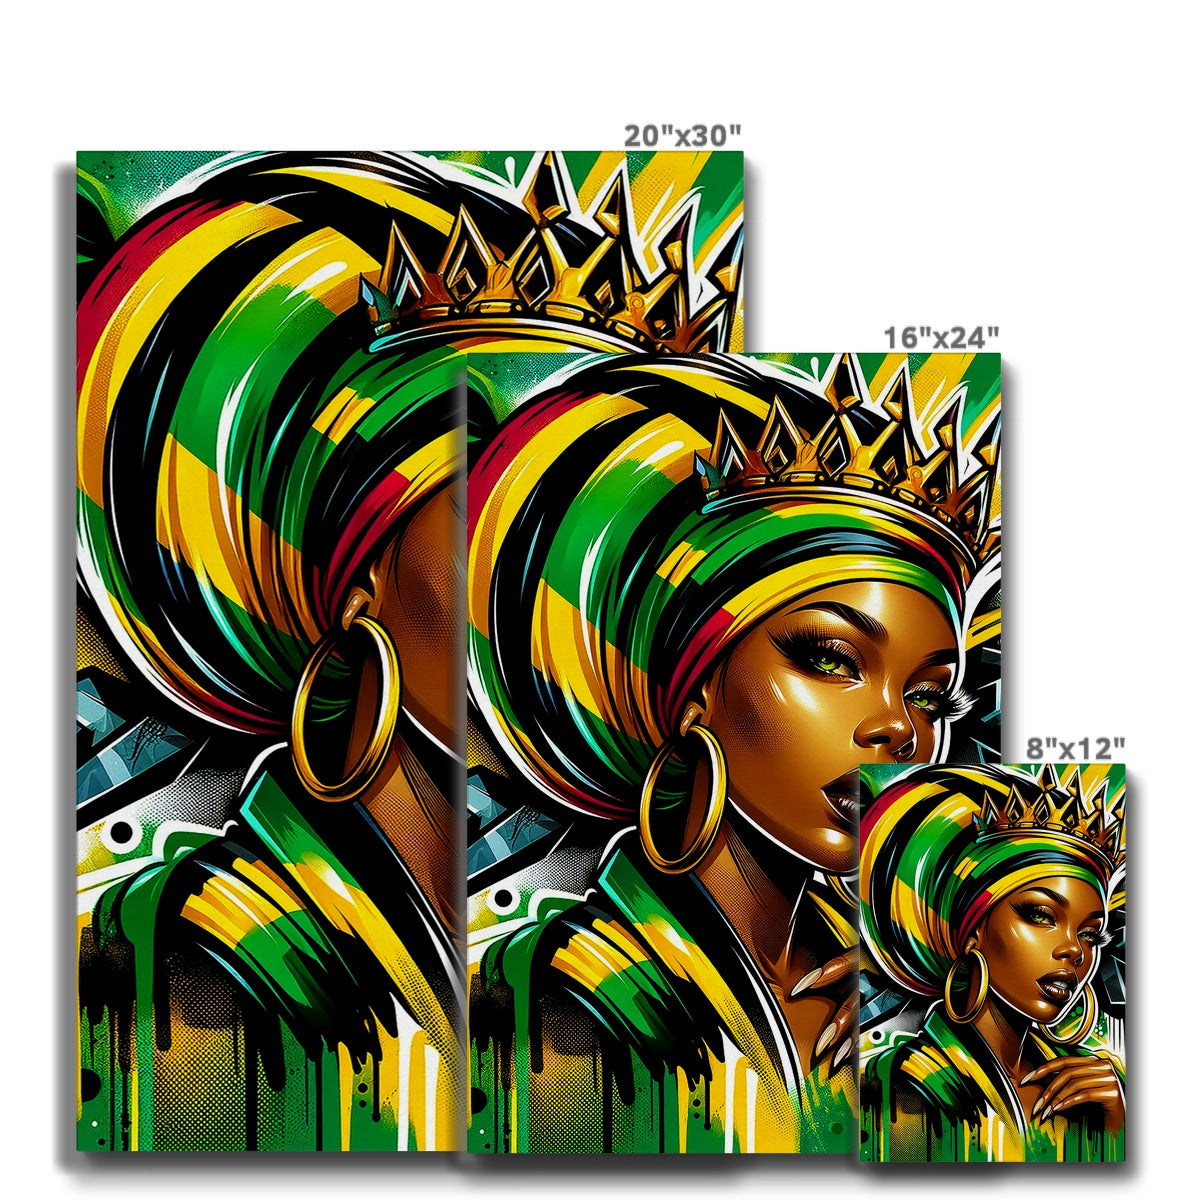 Gift For Her Rasta Queen Street Black Women Gift Eco Canvas